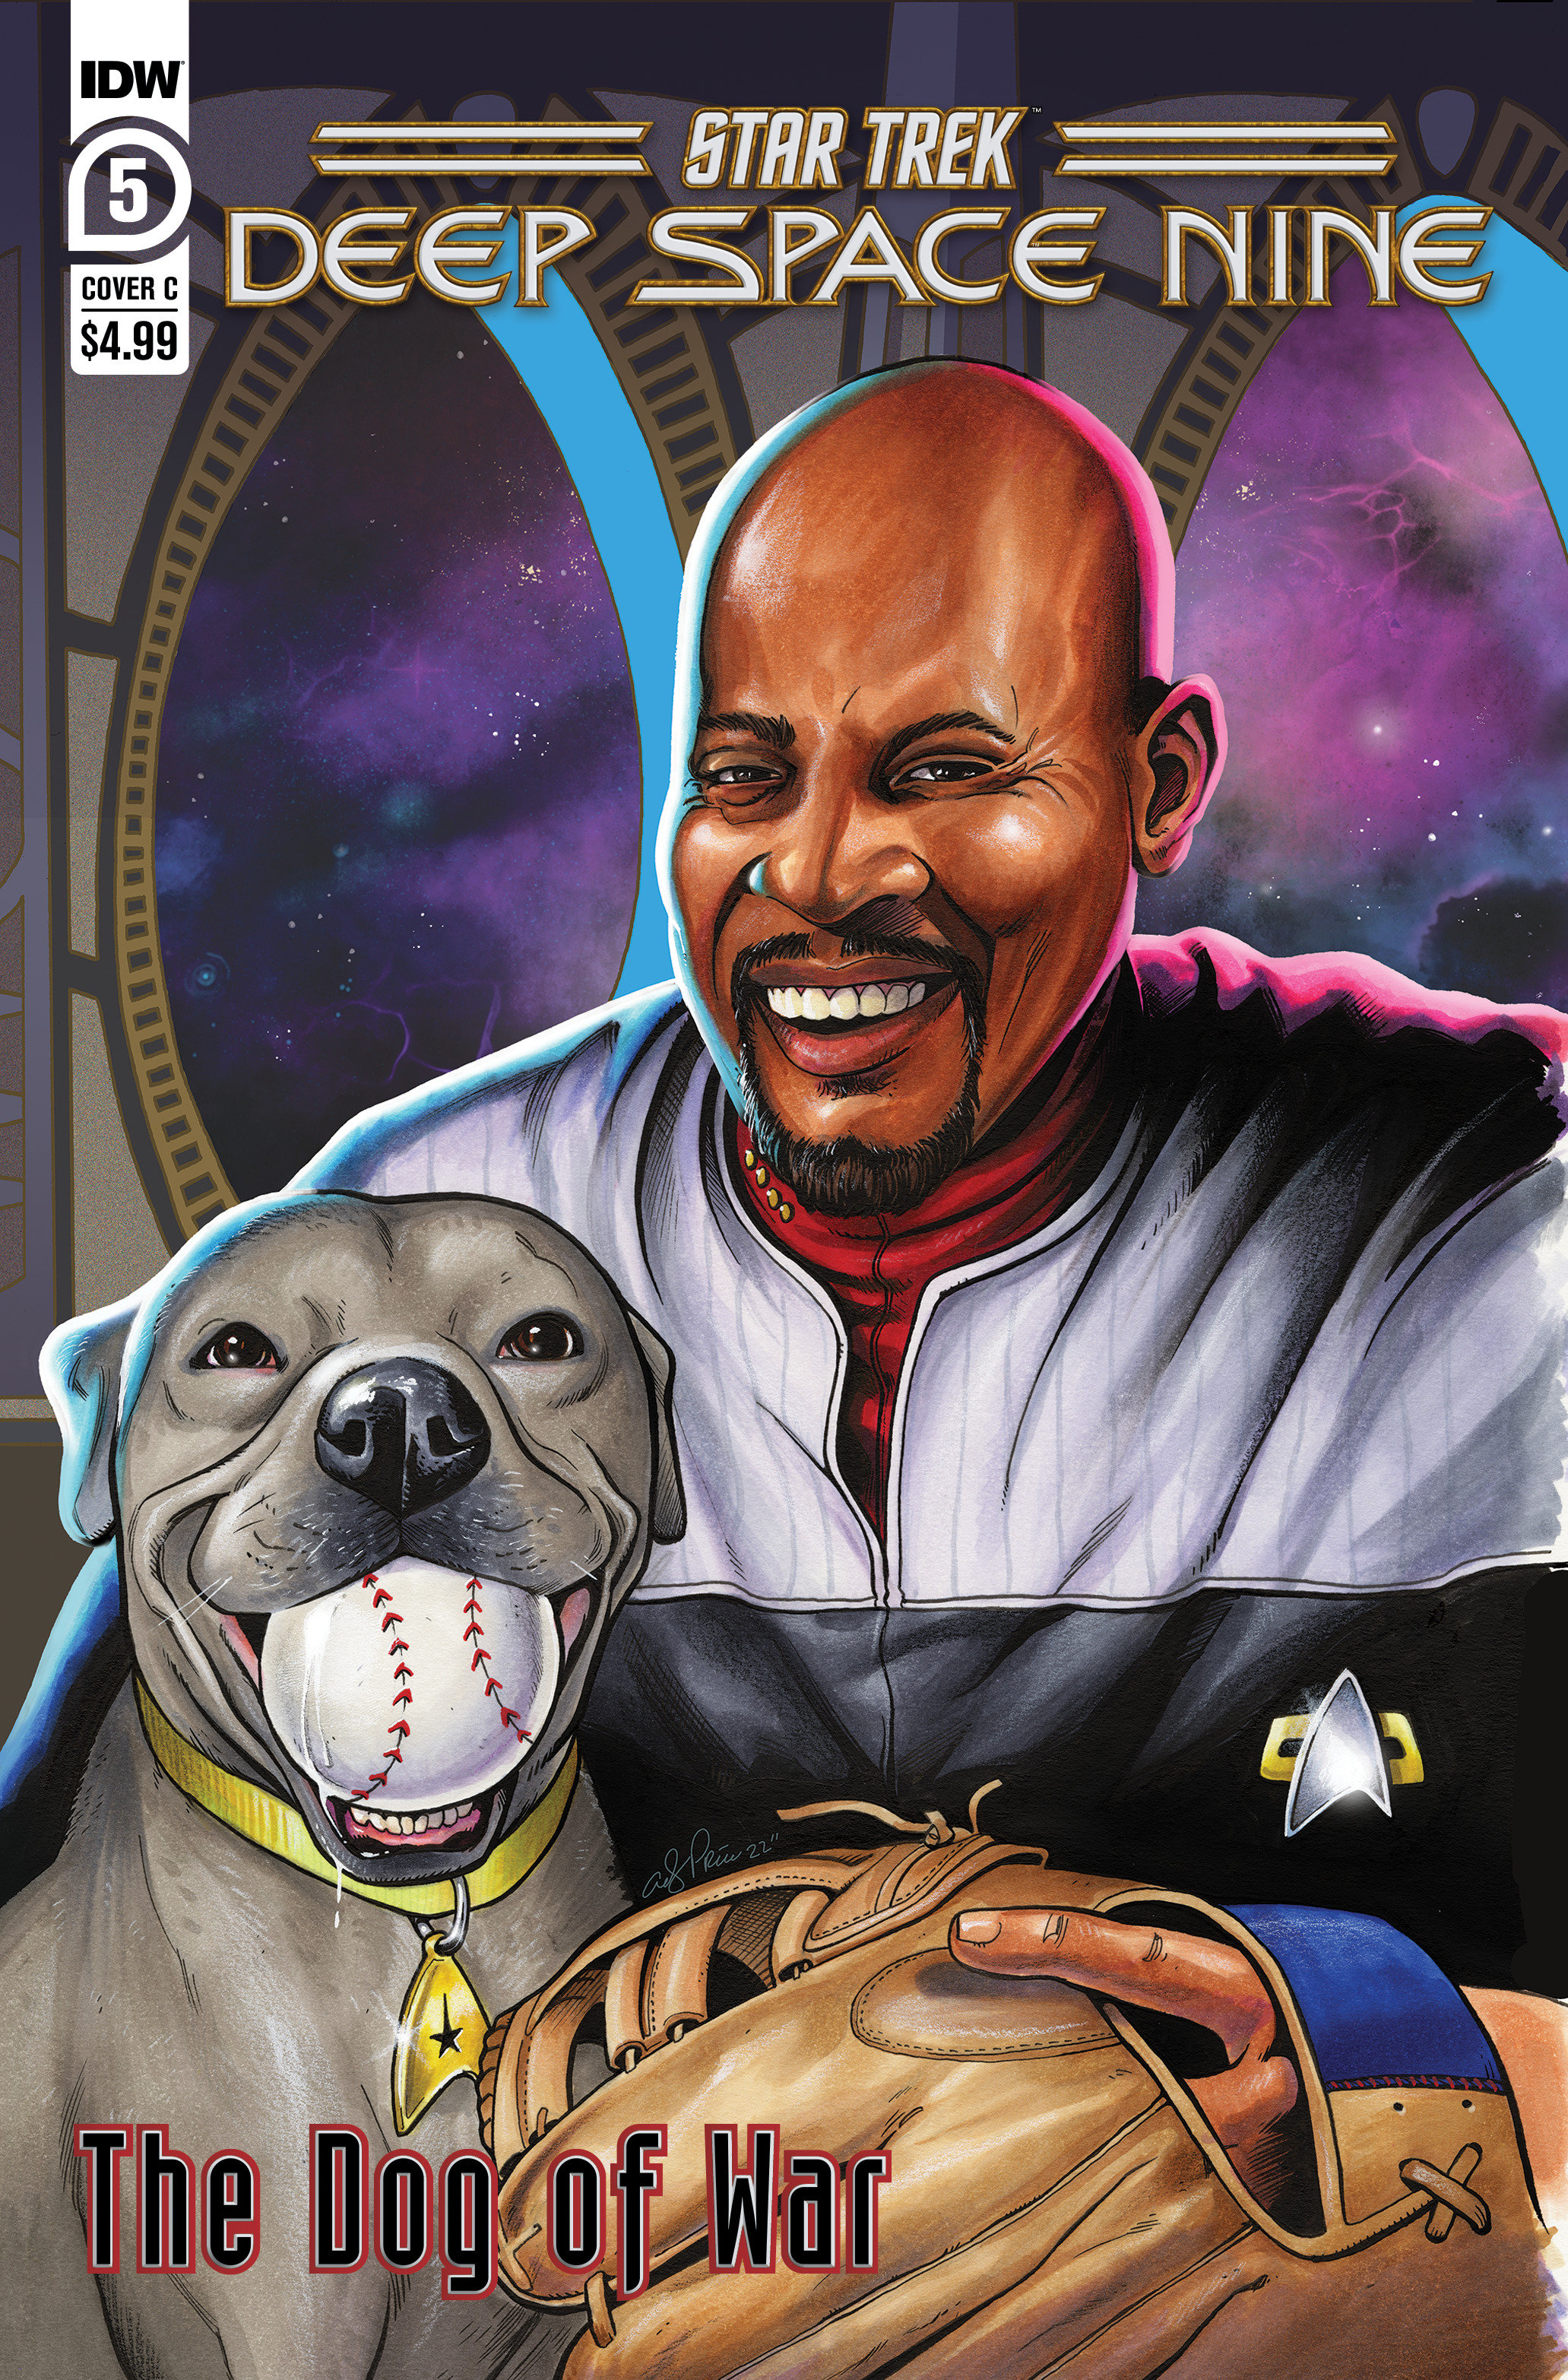 Star Trek Deep Space Nine The Dog of War #5 Cover C Price